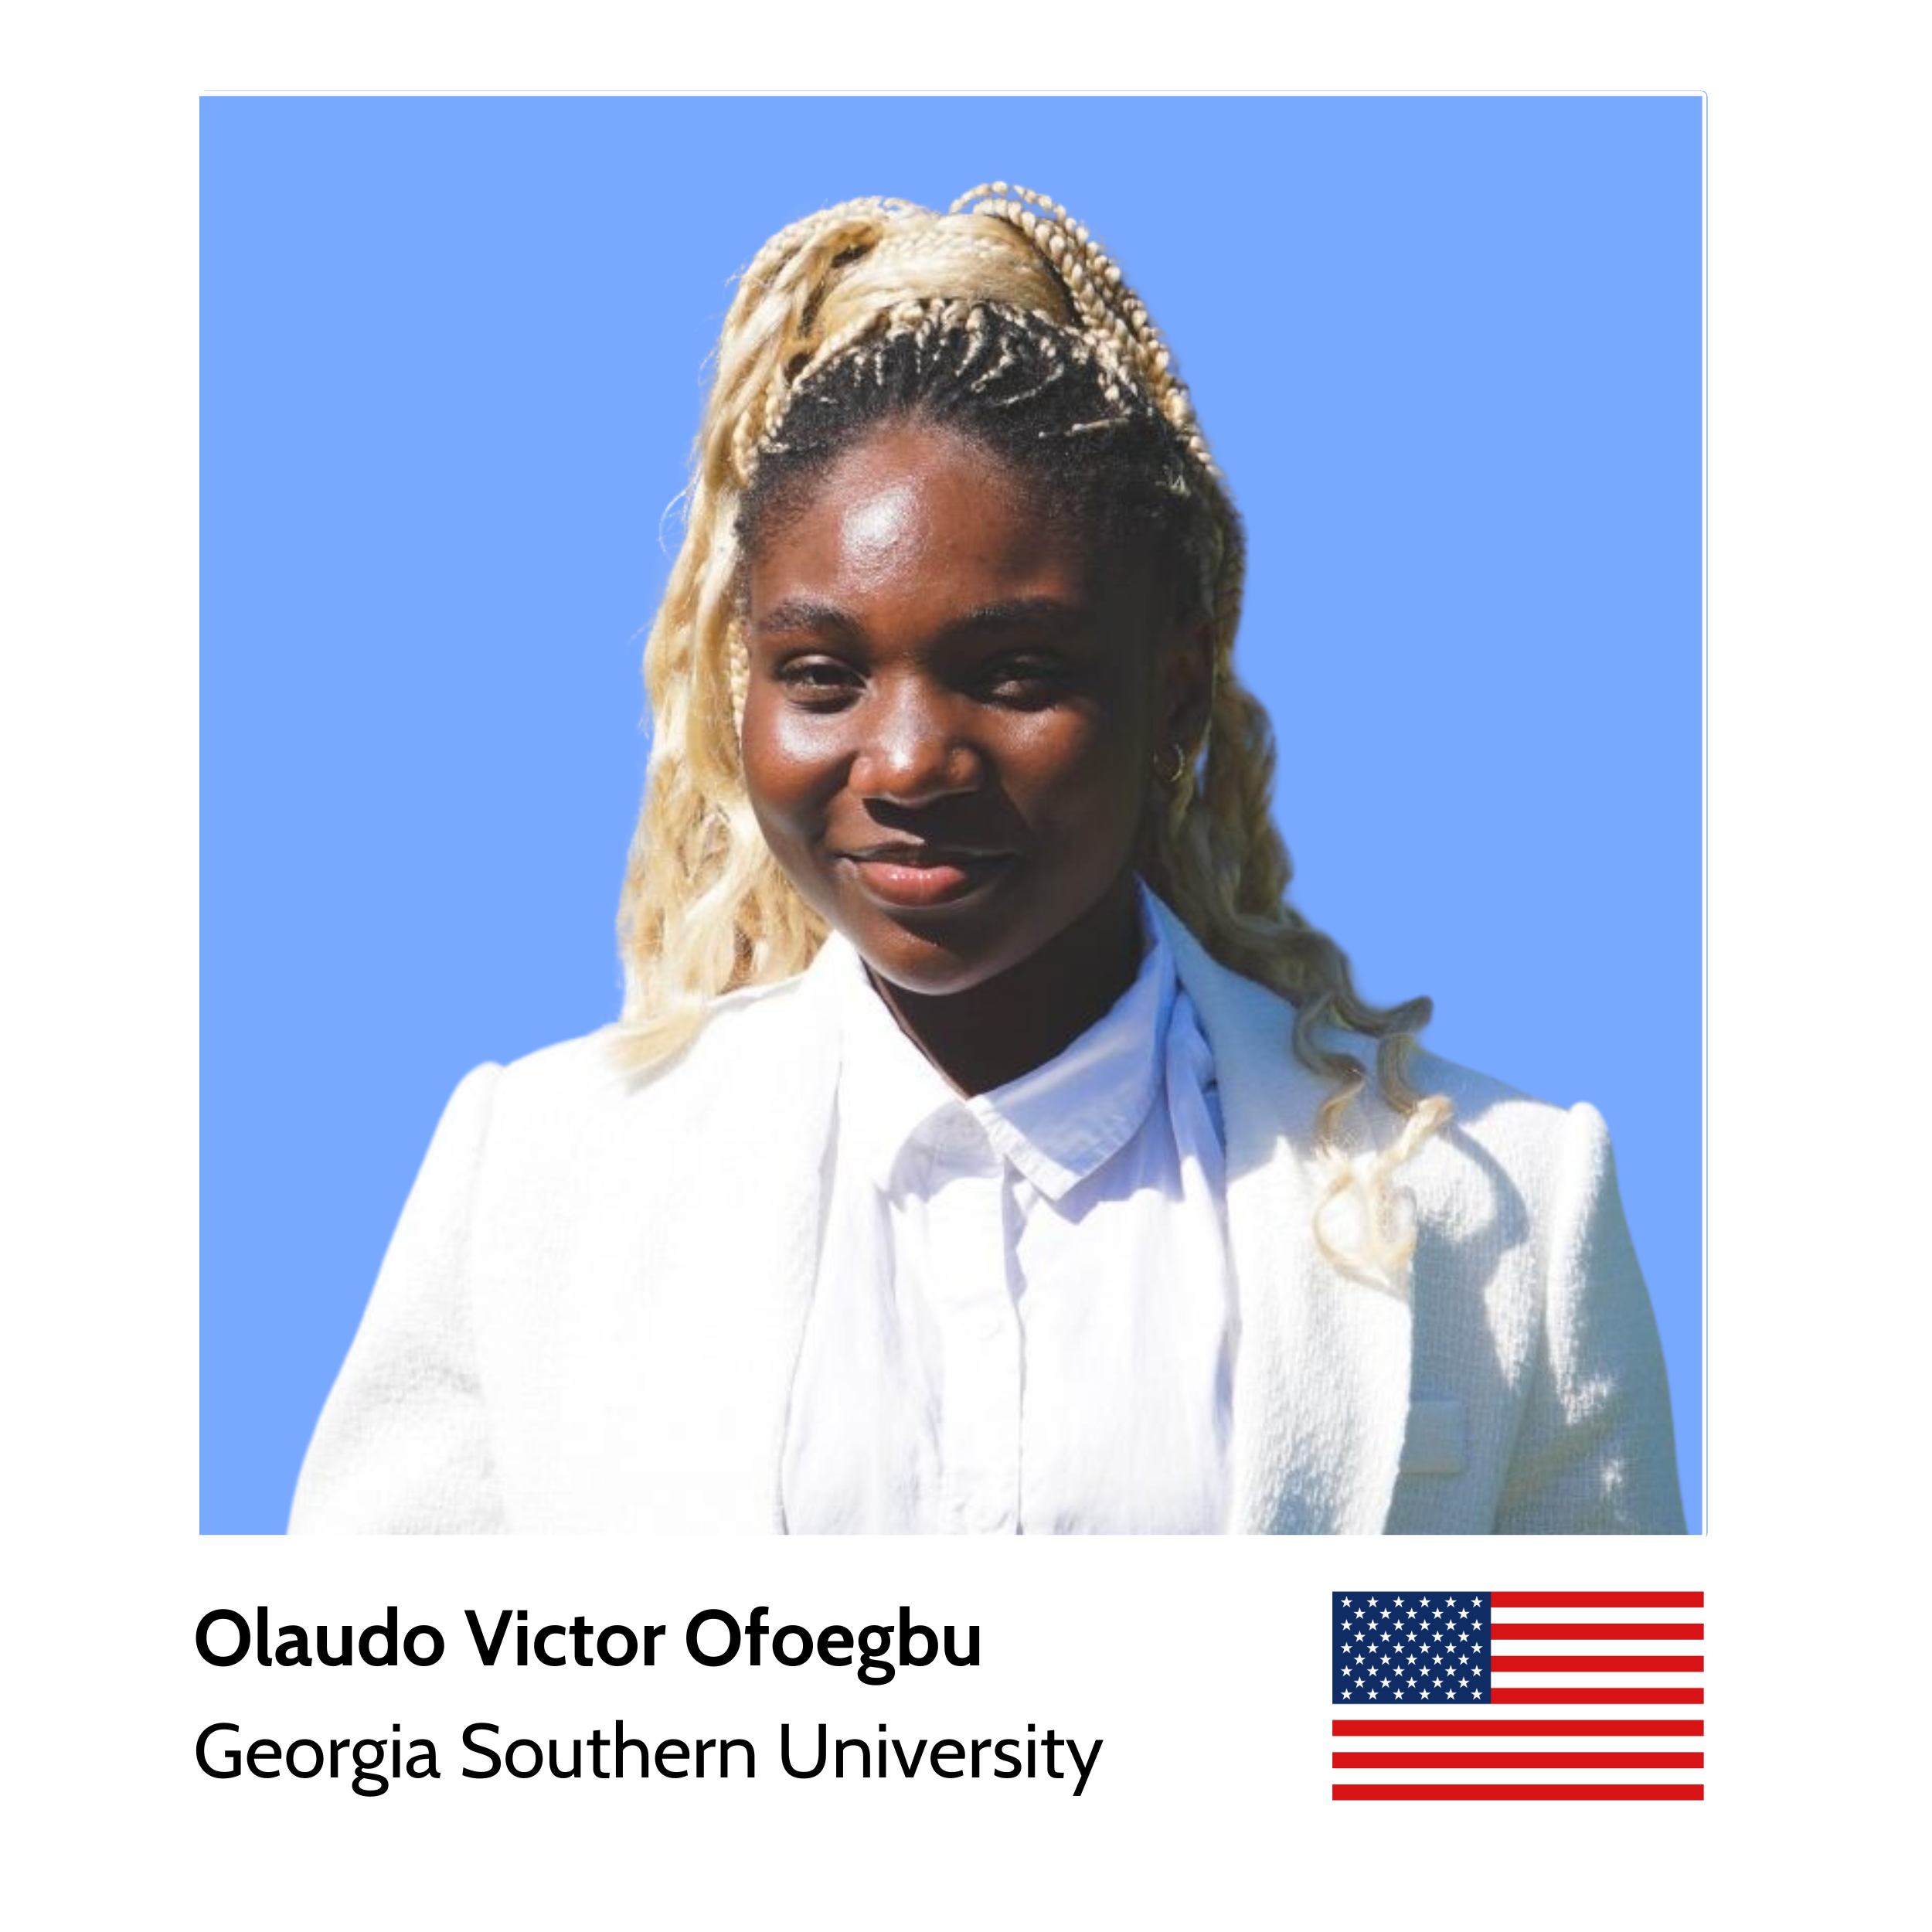 Your_Big_Year_ibm_z_student_ambassador_Olaudo_Victor_Ofoegbu_Georgia_Southern_University.png